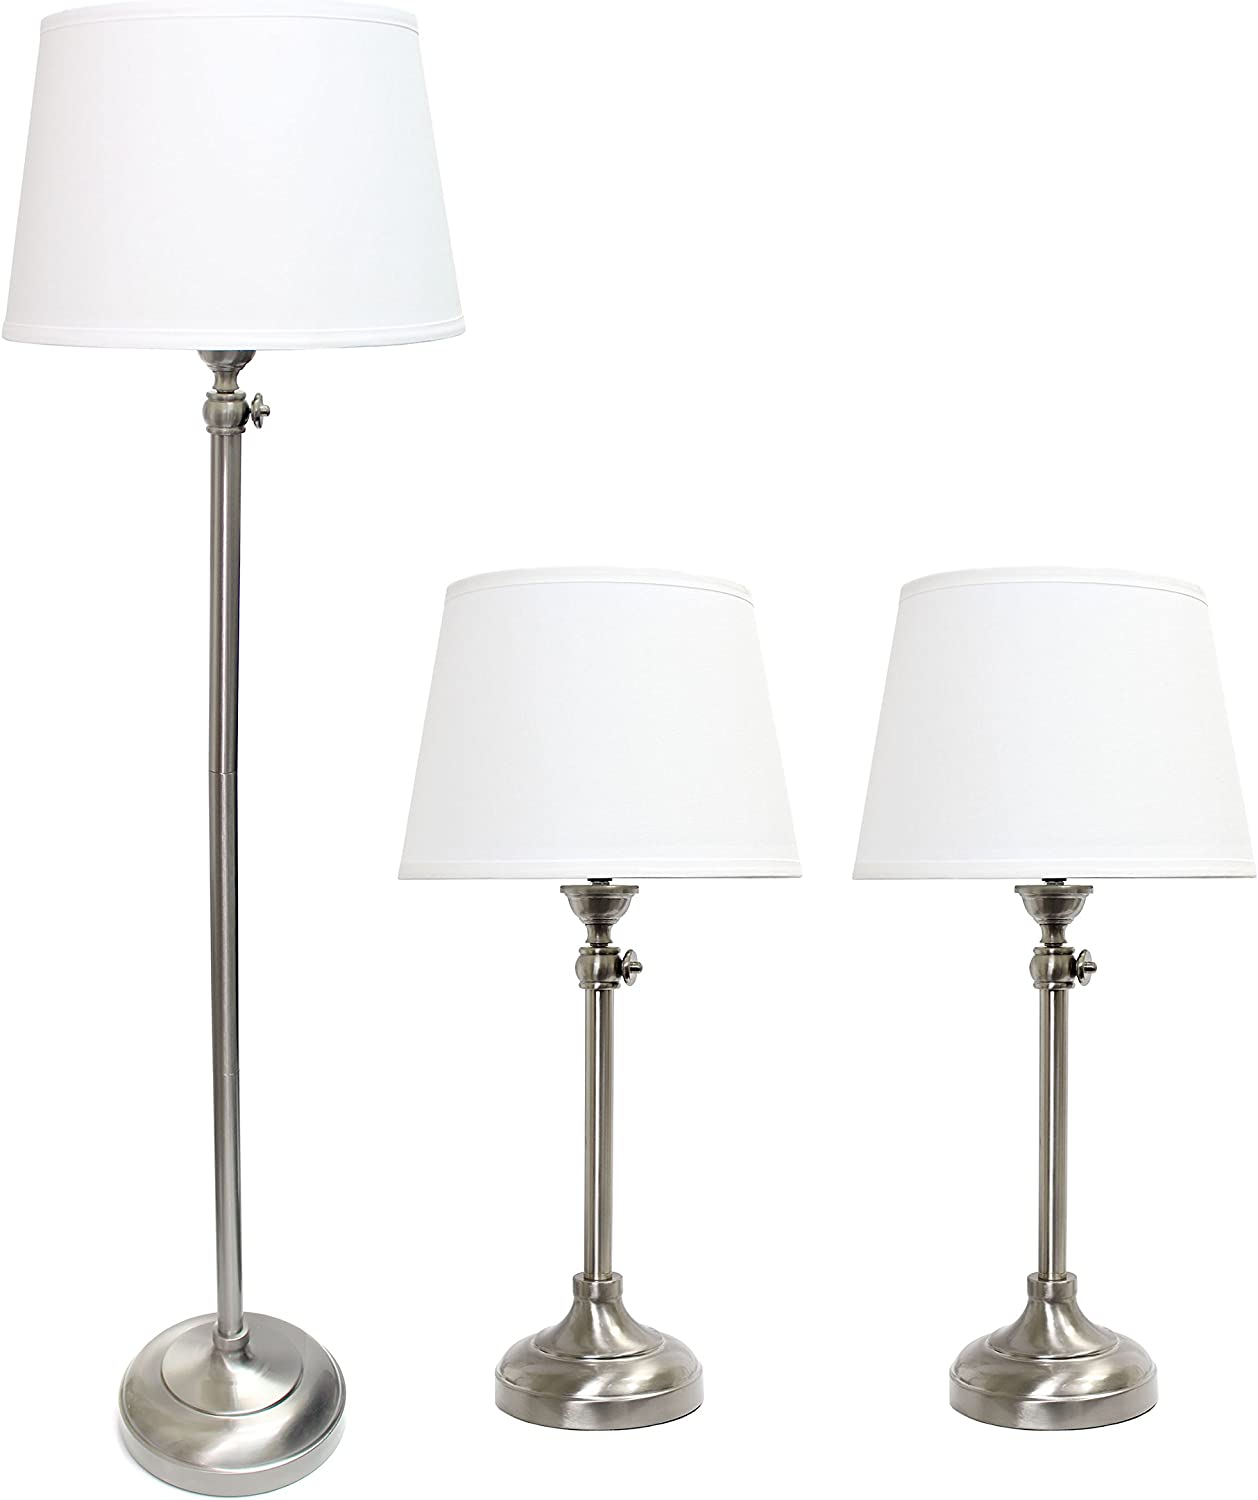 Elegant Designs LC1017-BSN Brushed Nickel Adjustable 3 Pack Lamp Set